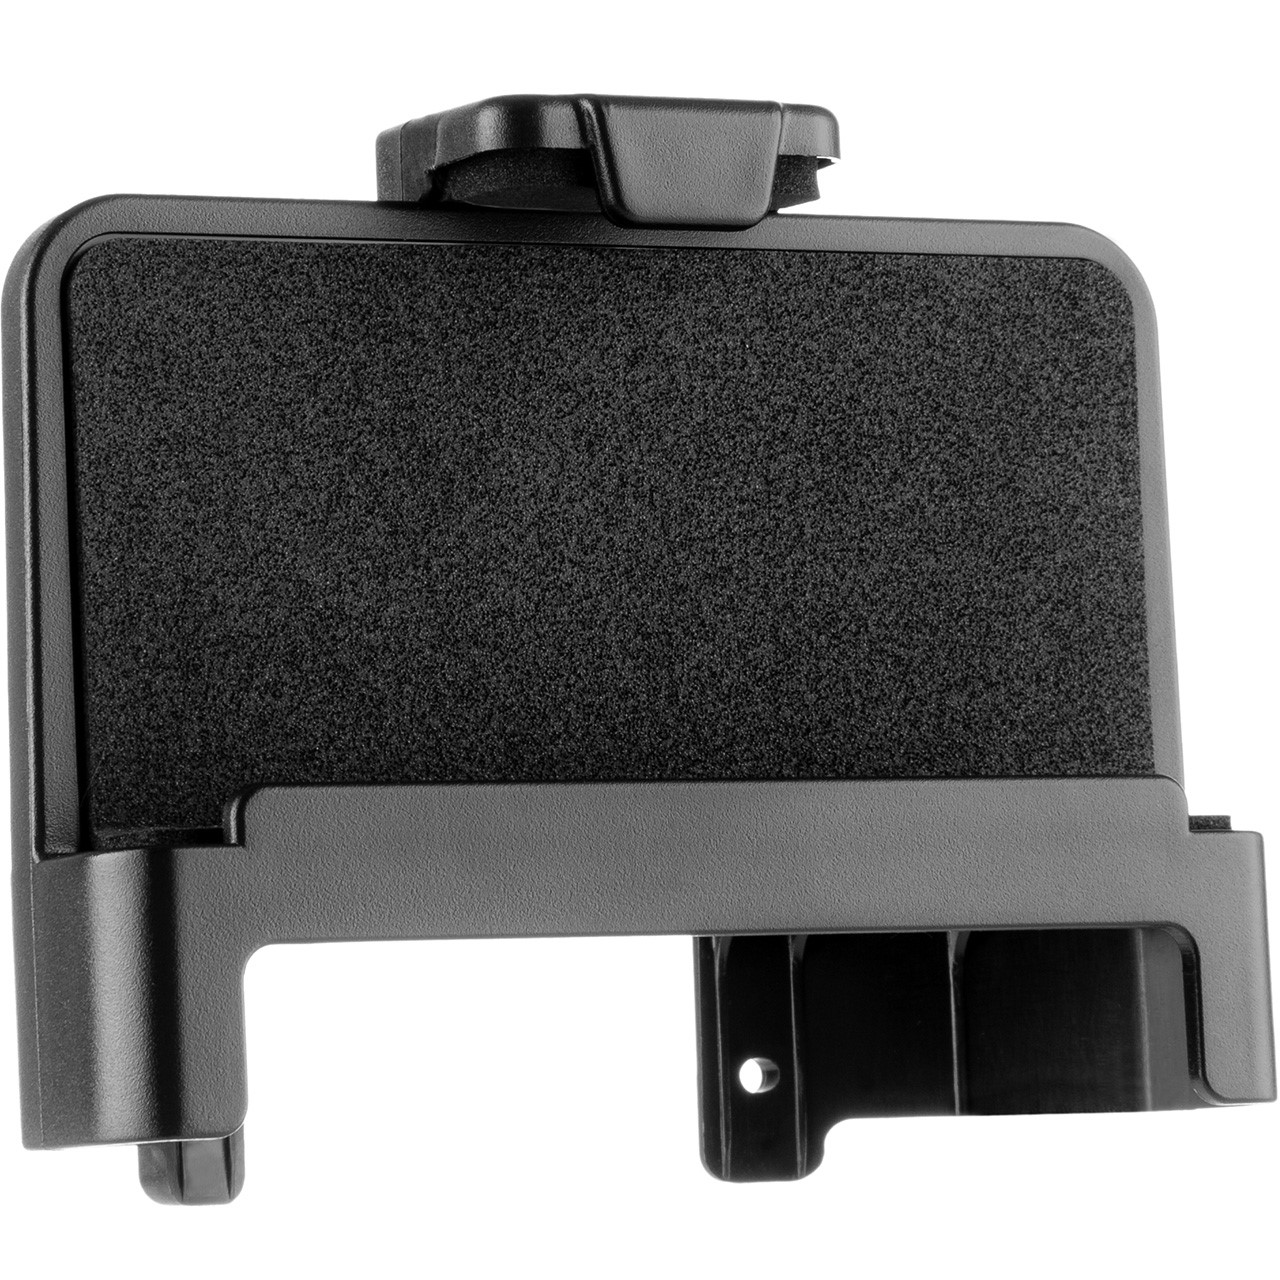 Fluid Rower Smart Phone Holder - V & XL models